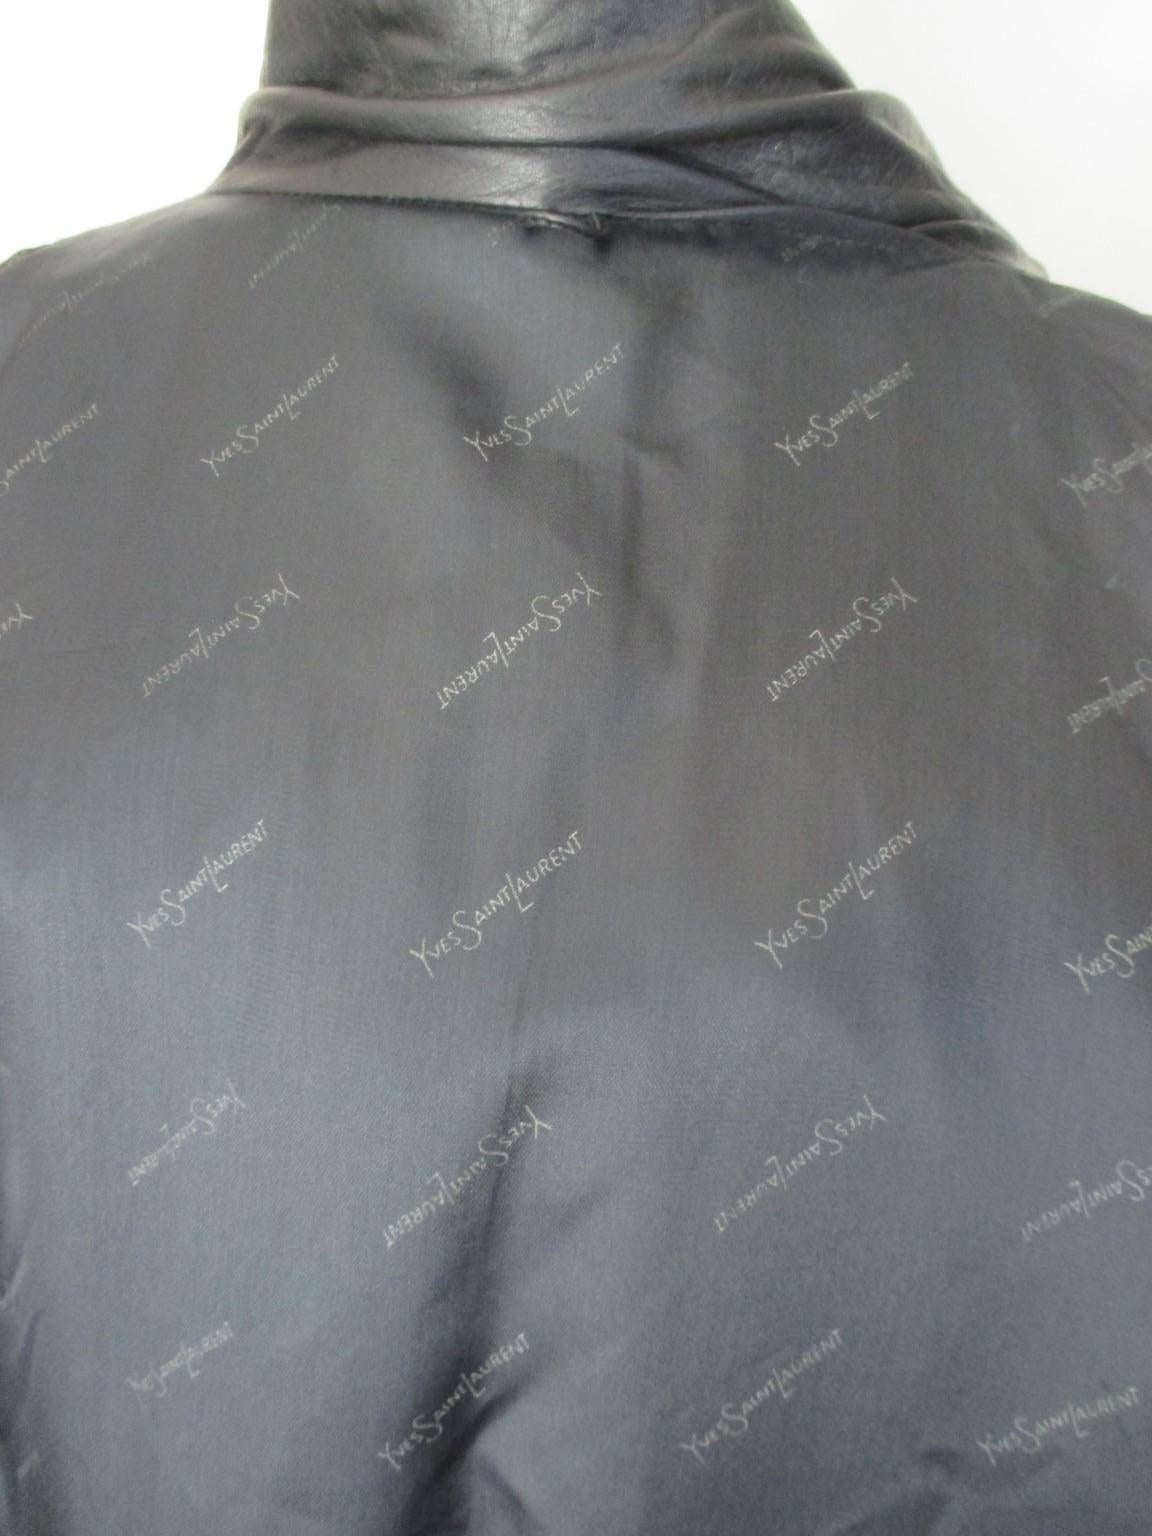 Women's or Men's Yves Saint Laurent Piet Mondrian Art Leather Coat  For Sale